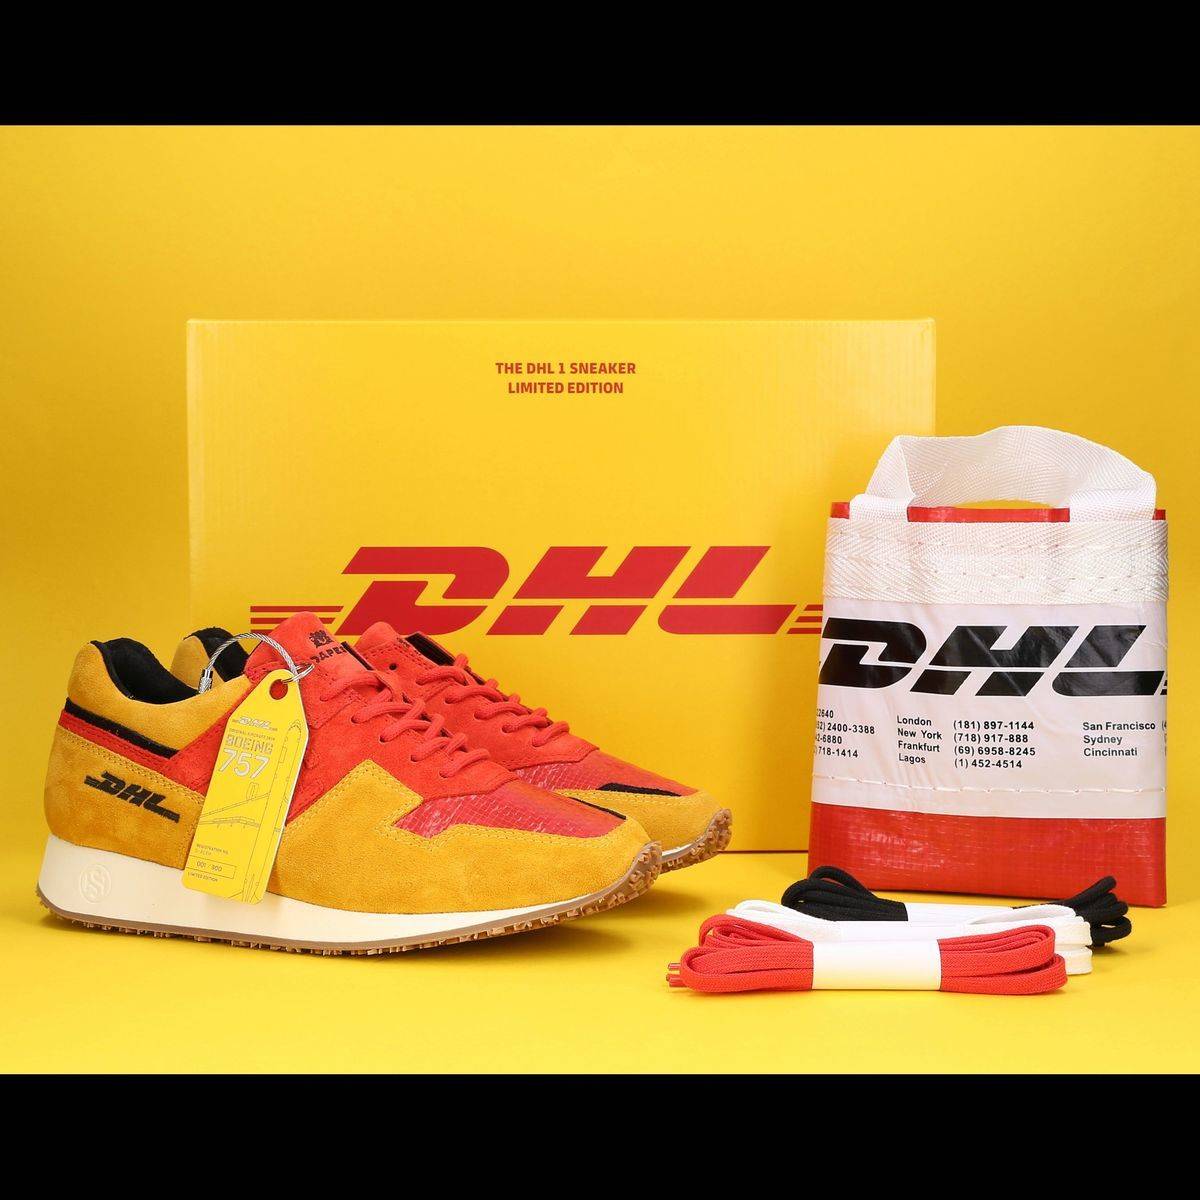 Sneaker-Kooperation: Exklusive Verpackung und Design